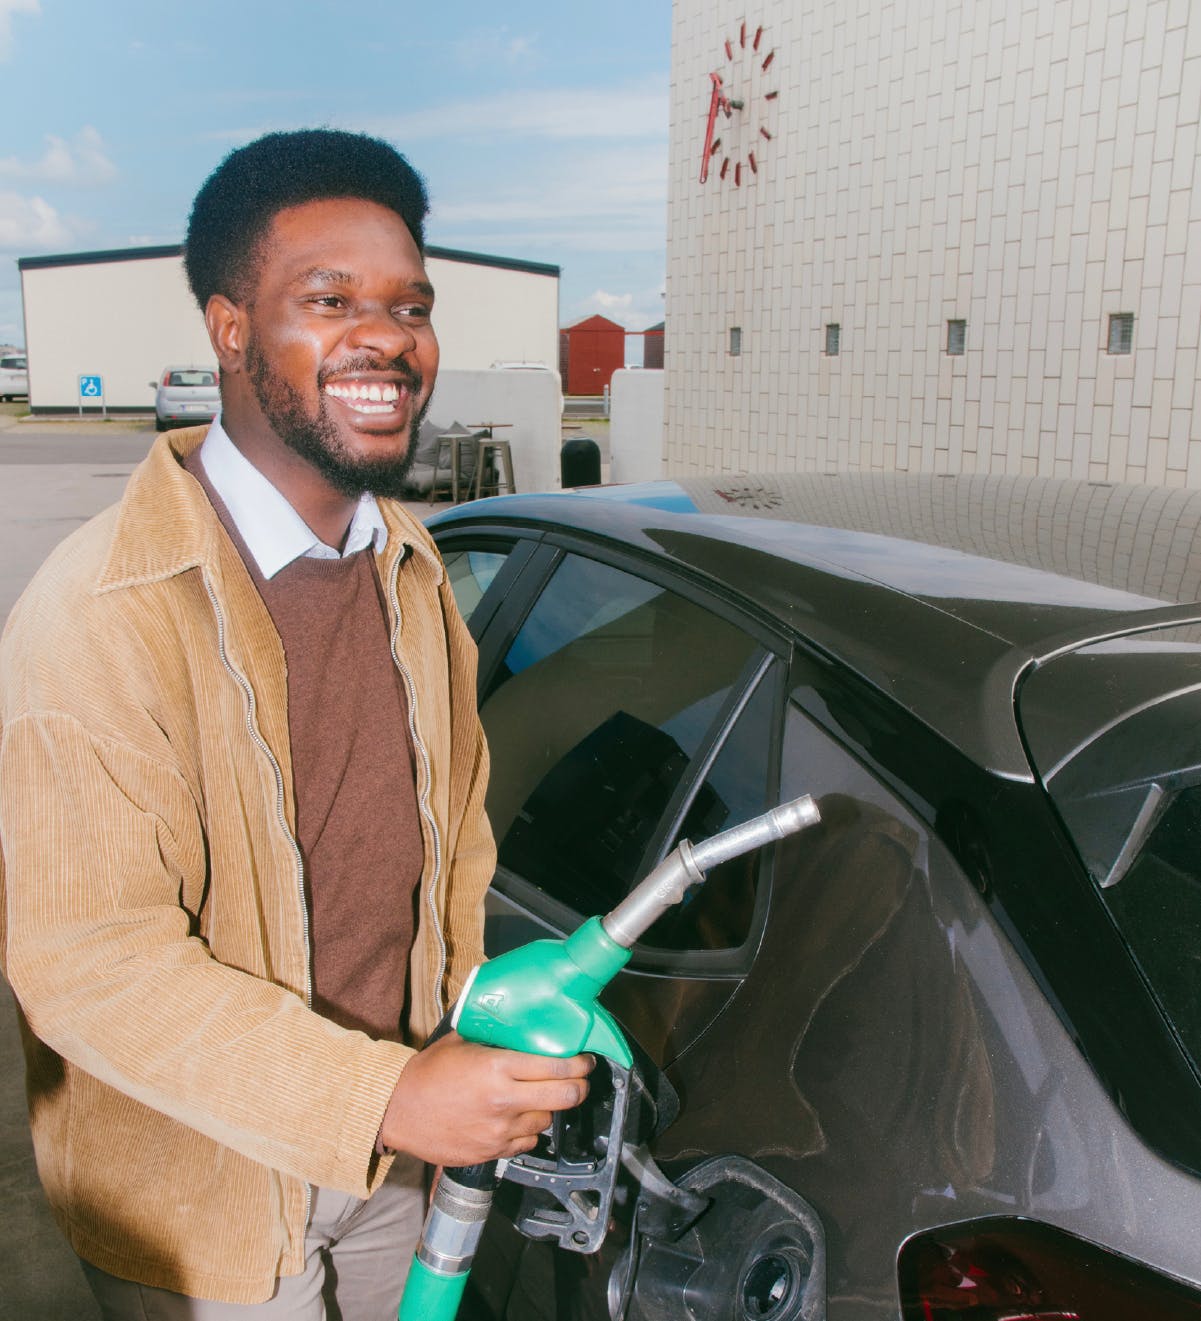 A happy employee fuels his car